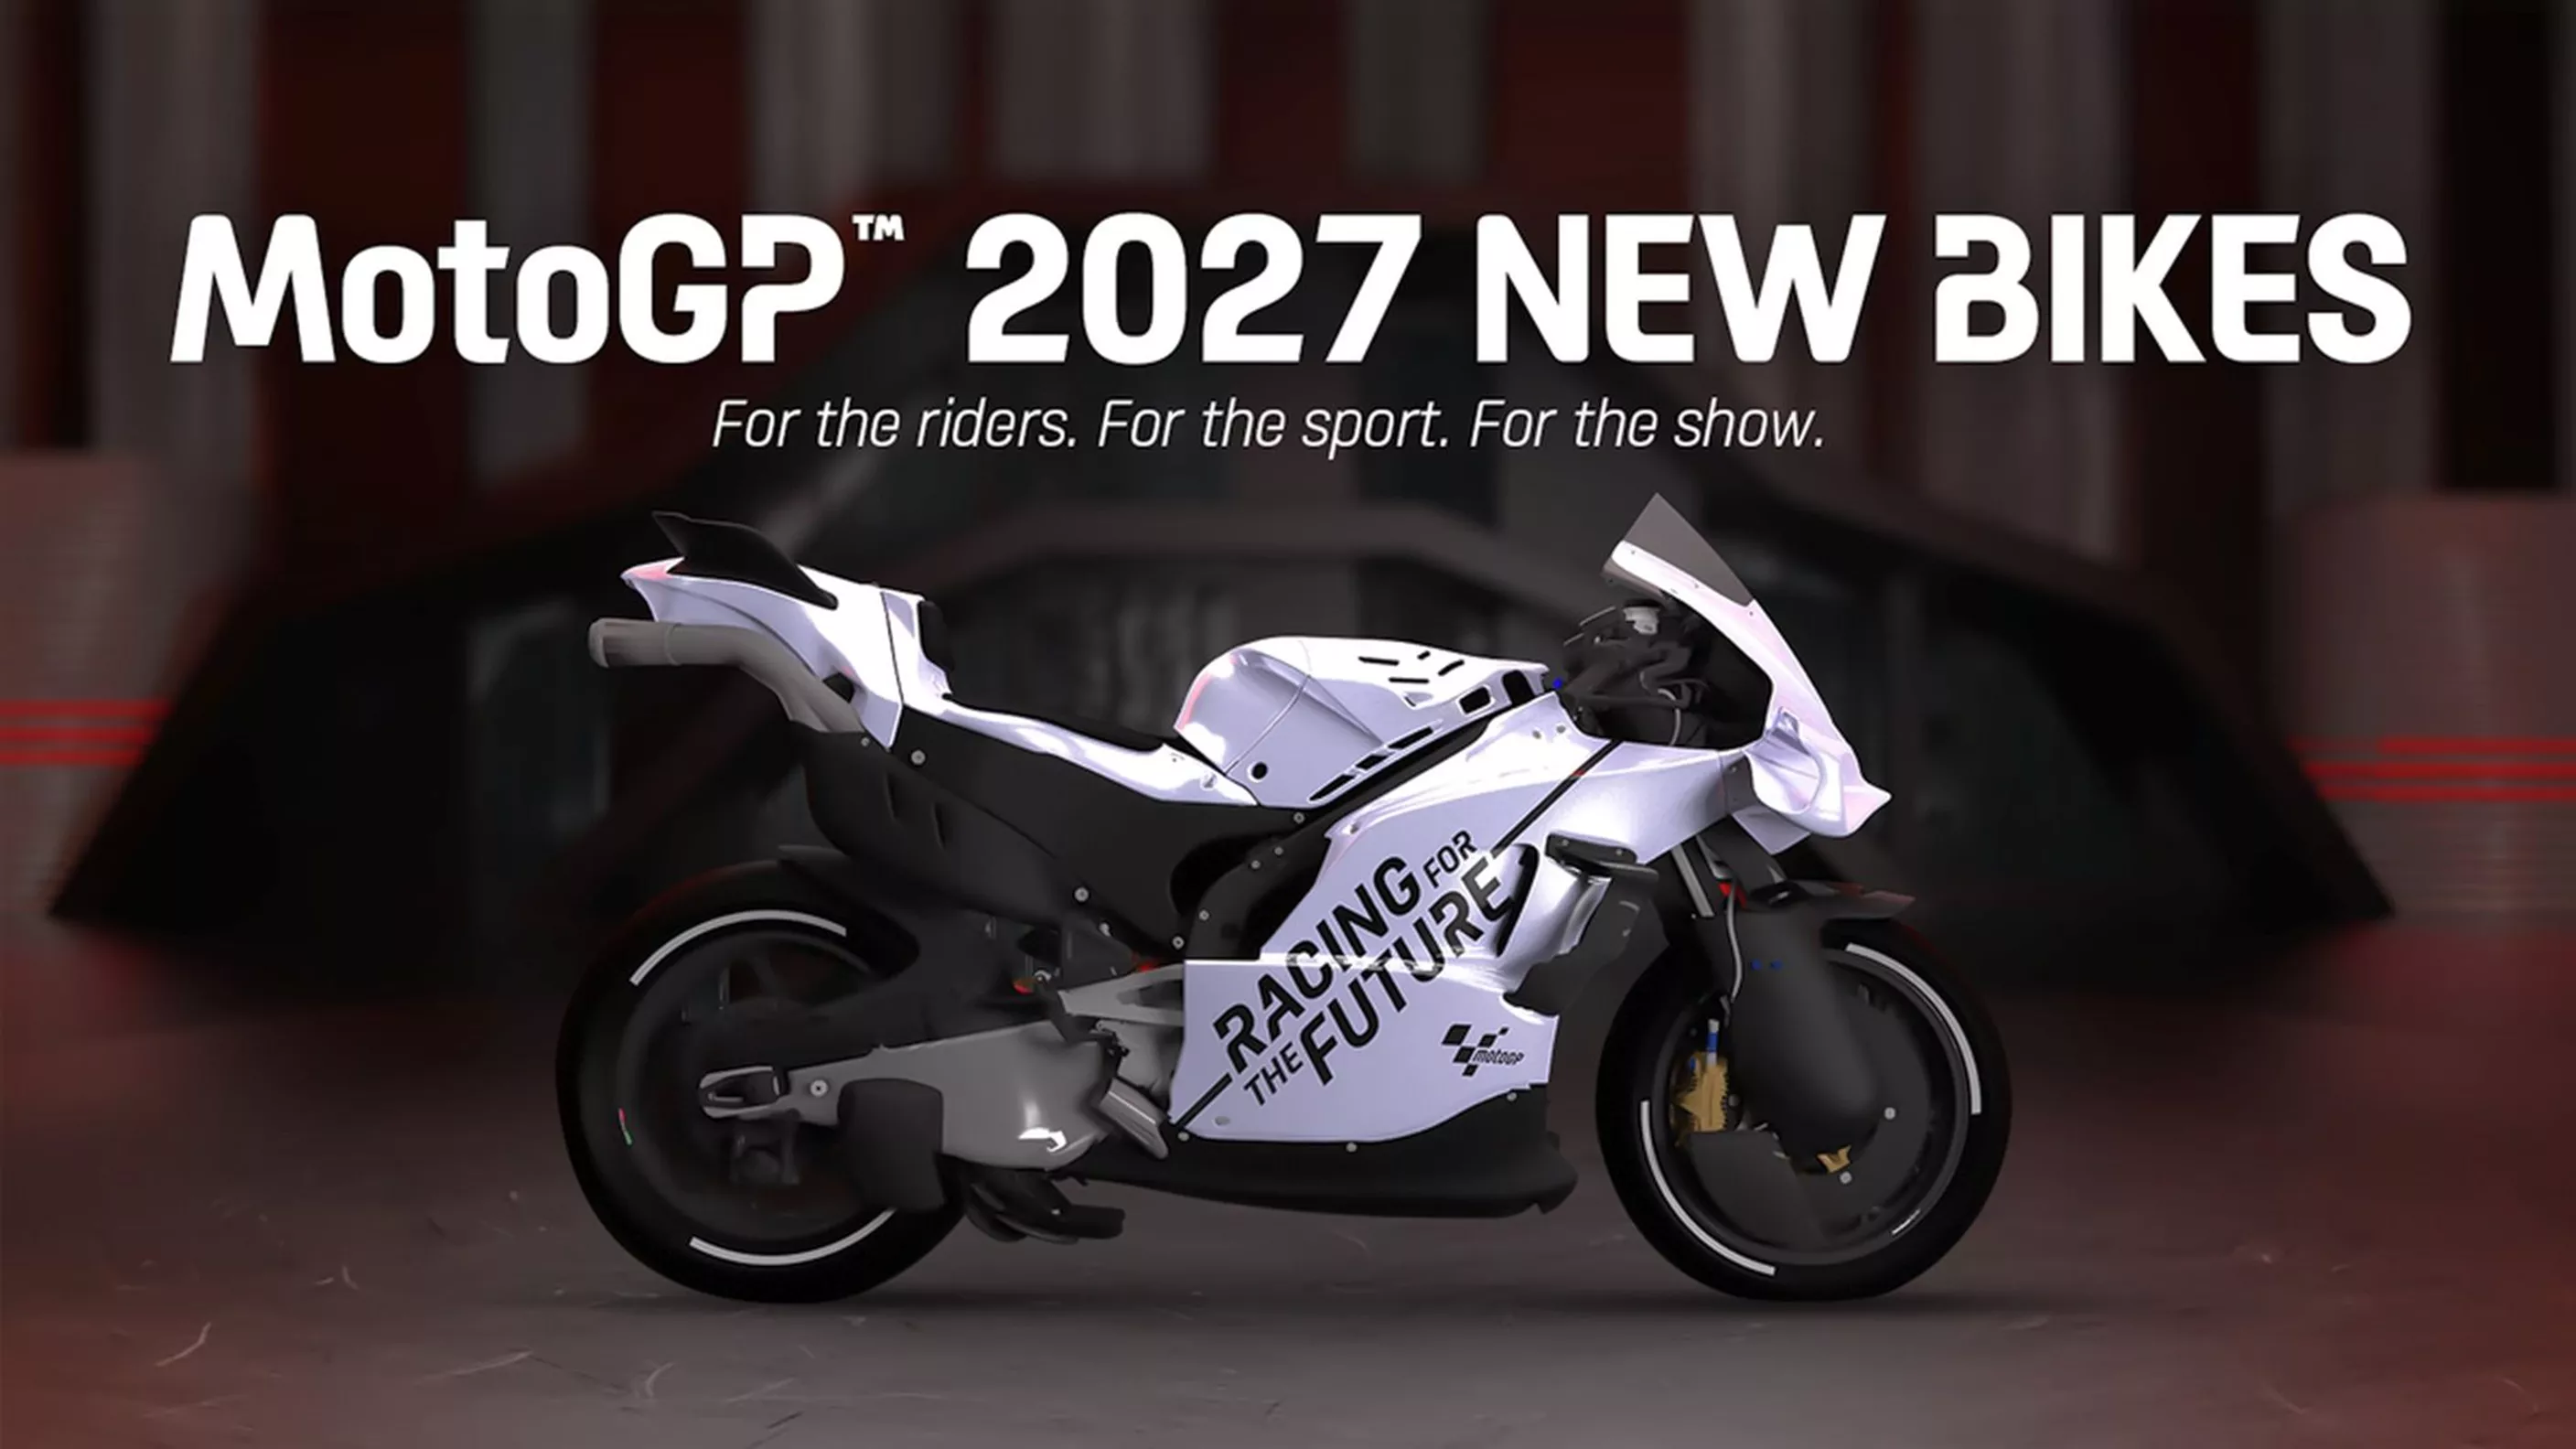 MotoGP regulations 2027 - Less displacement, no ride height